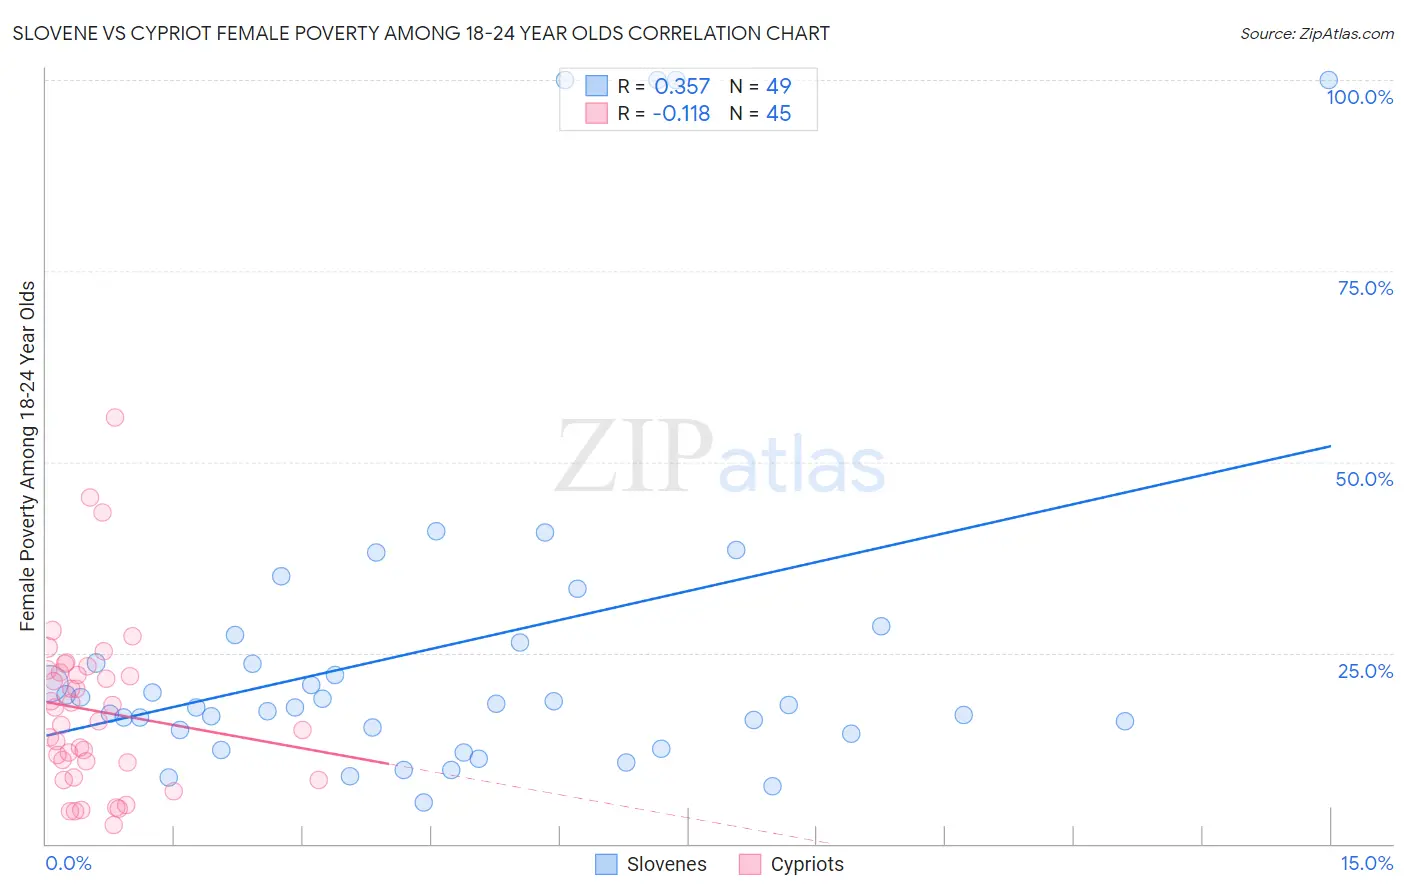 Slovene vs Cypriot Female Poverty Among 18-24 Year Olds